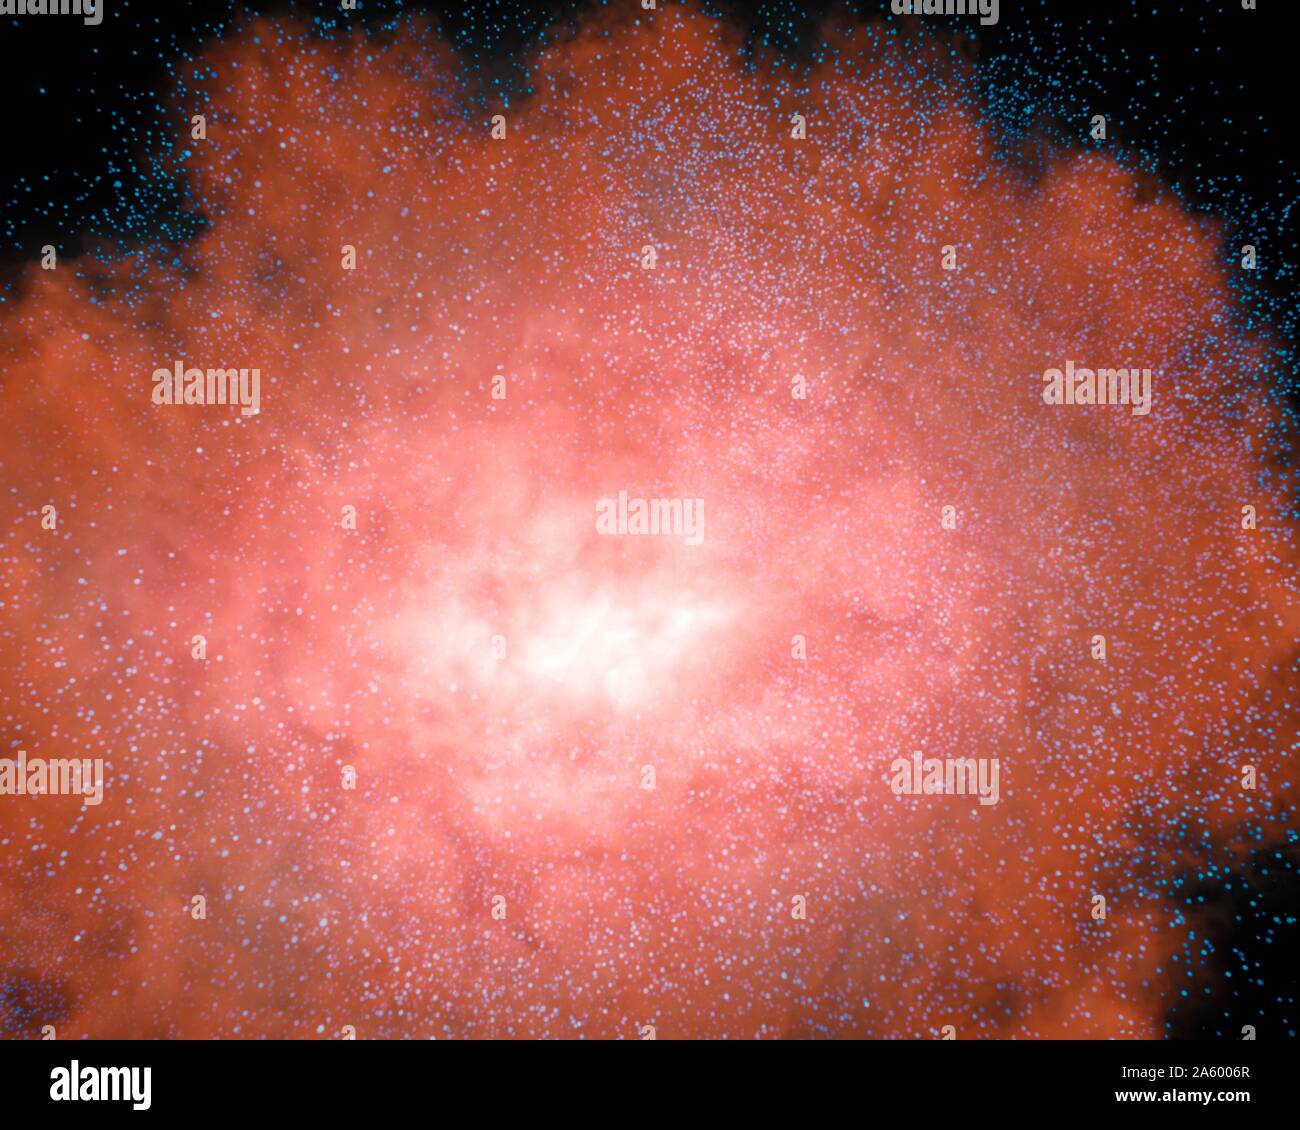 Luz infrarroja fotografías e imágenes de alta resolución - Alamy